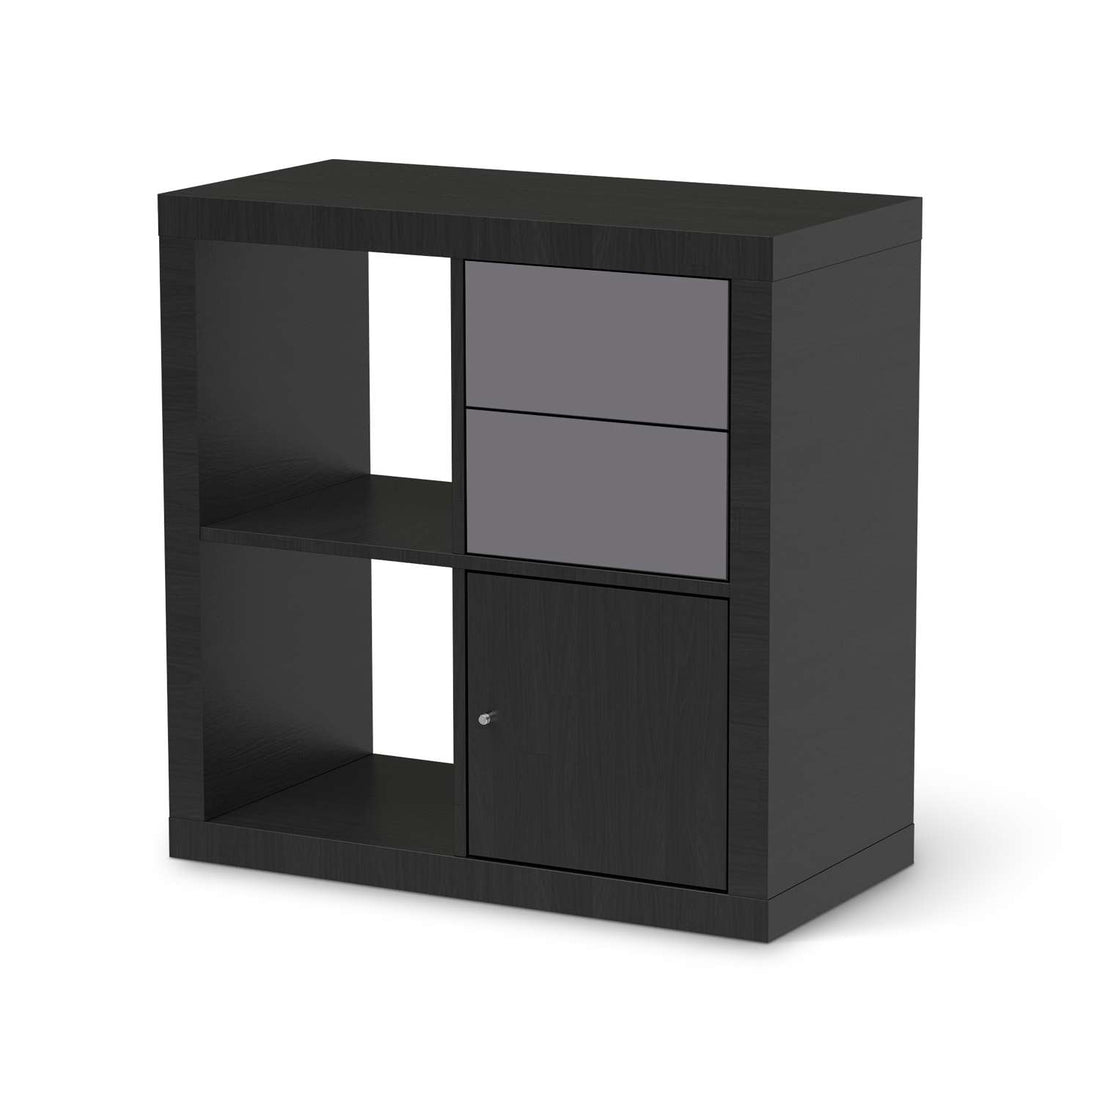 Möbelfolie Grau Light - IKEA Kallax Regal Schubladen - schwarz